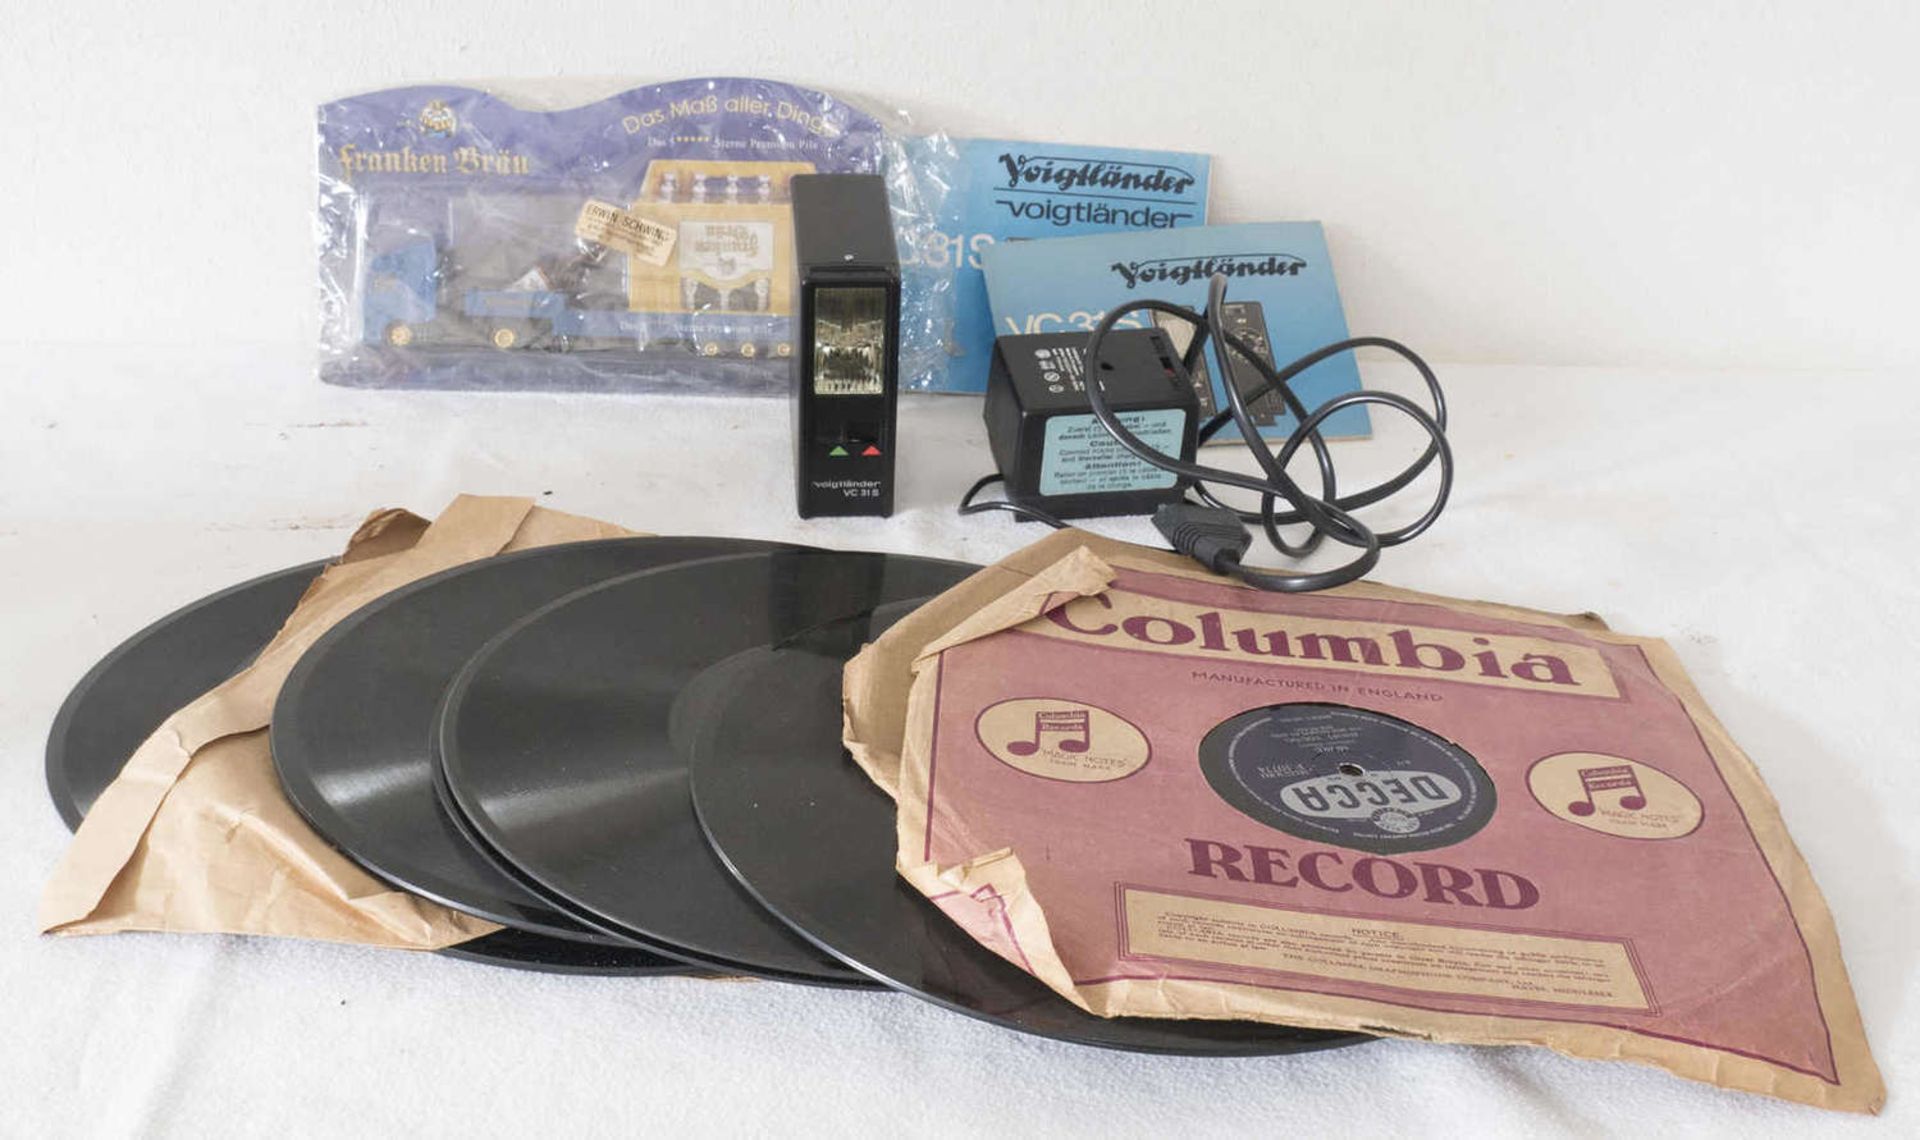 Konvolut Schellack - Platten Convolute records